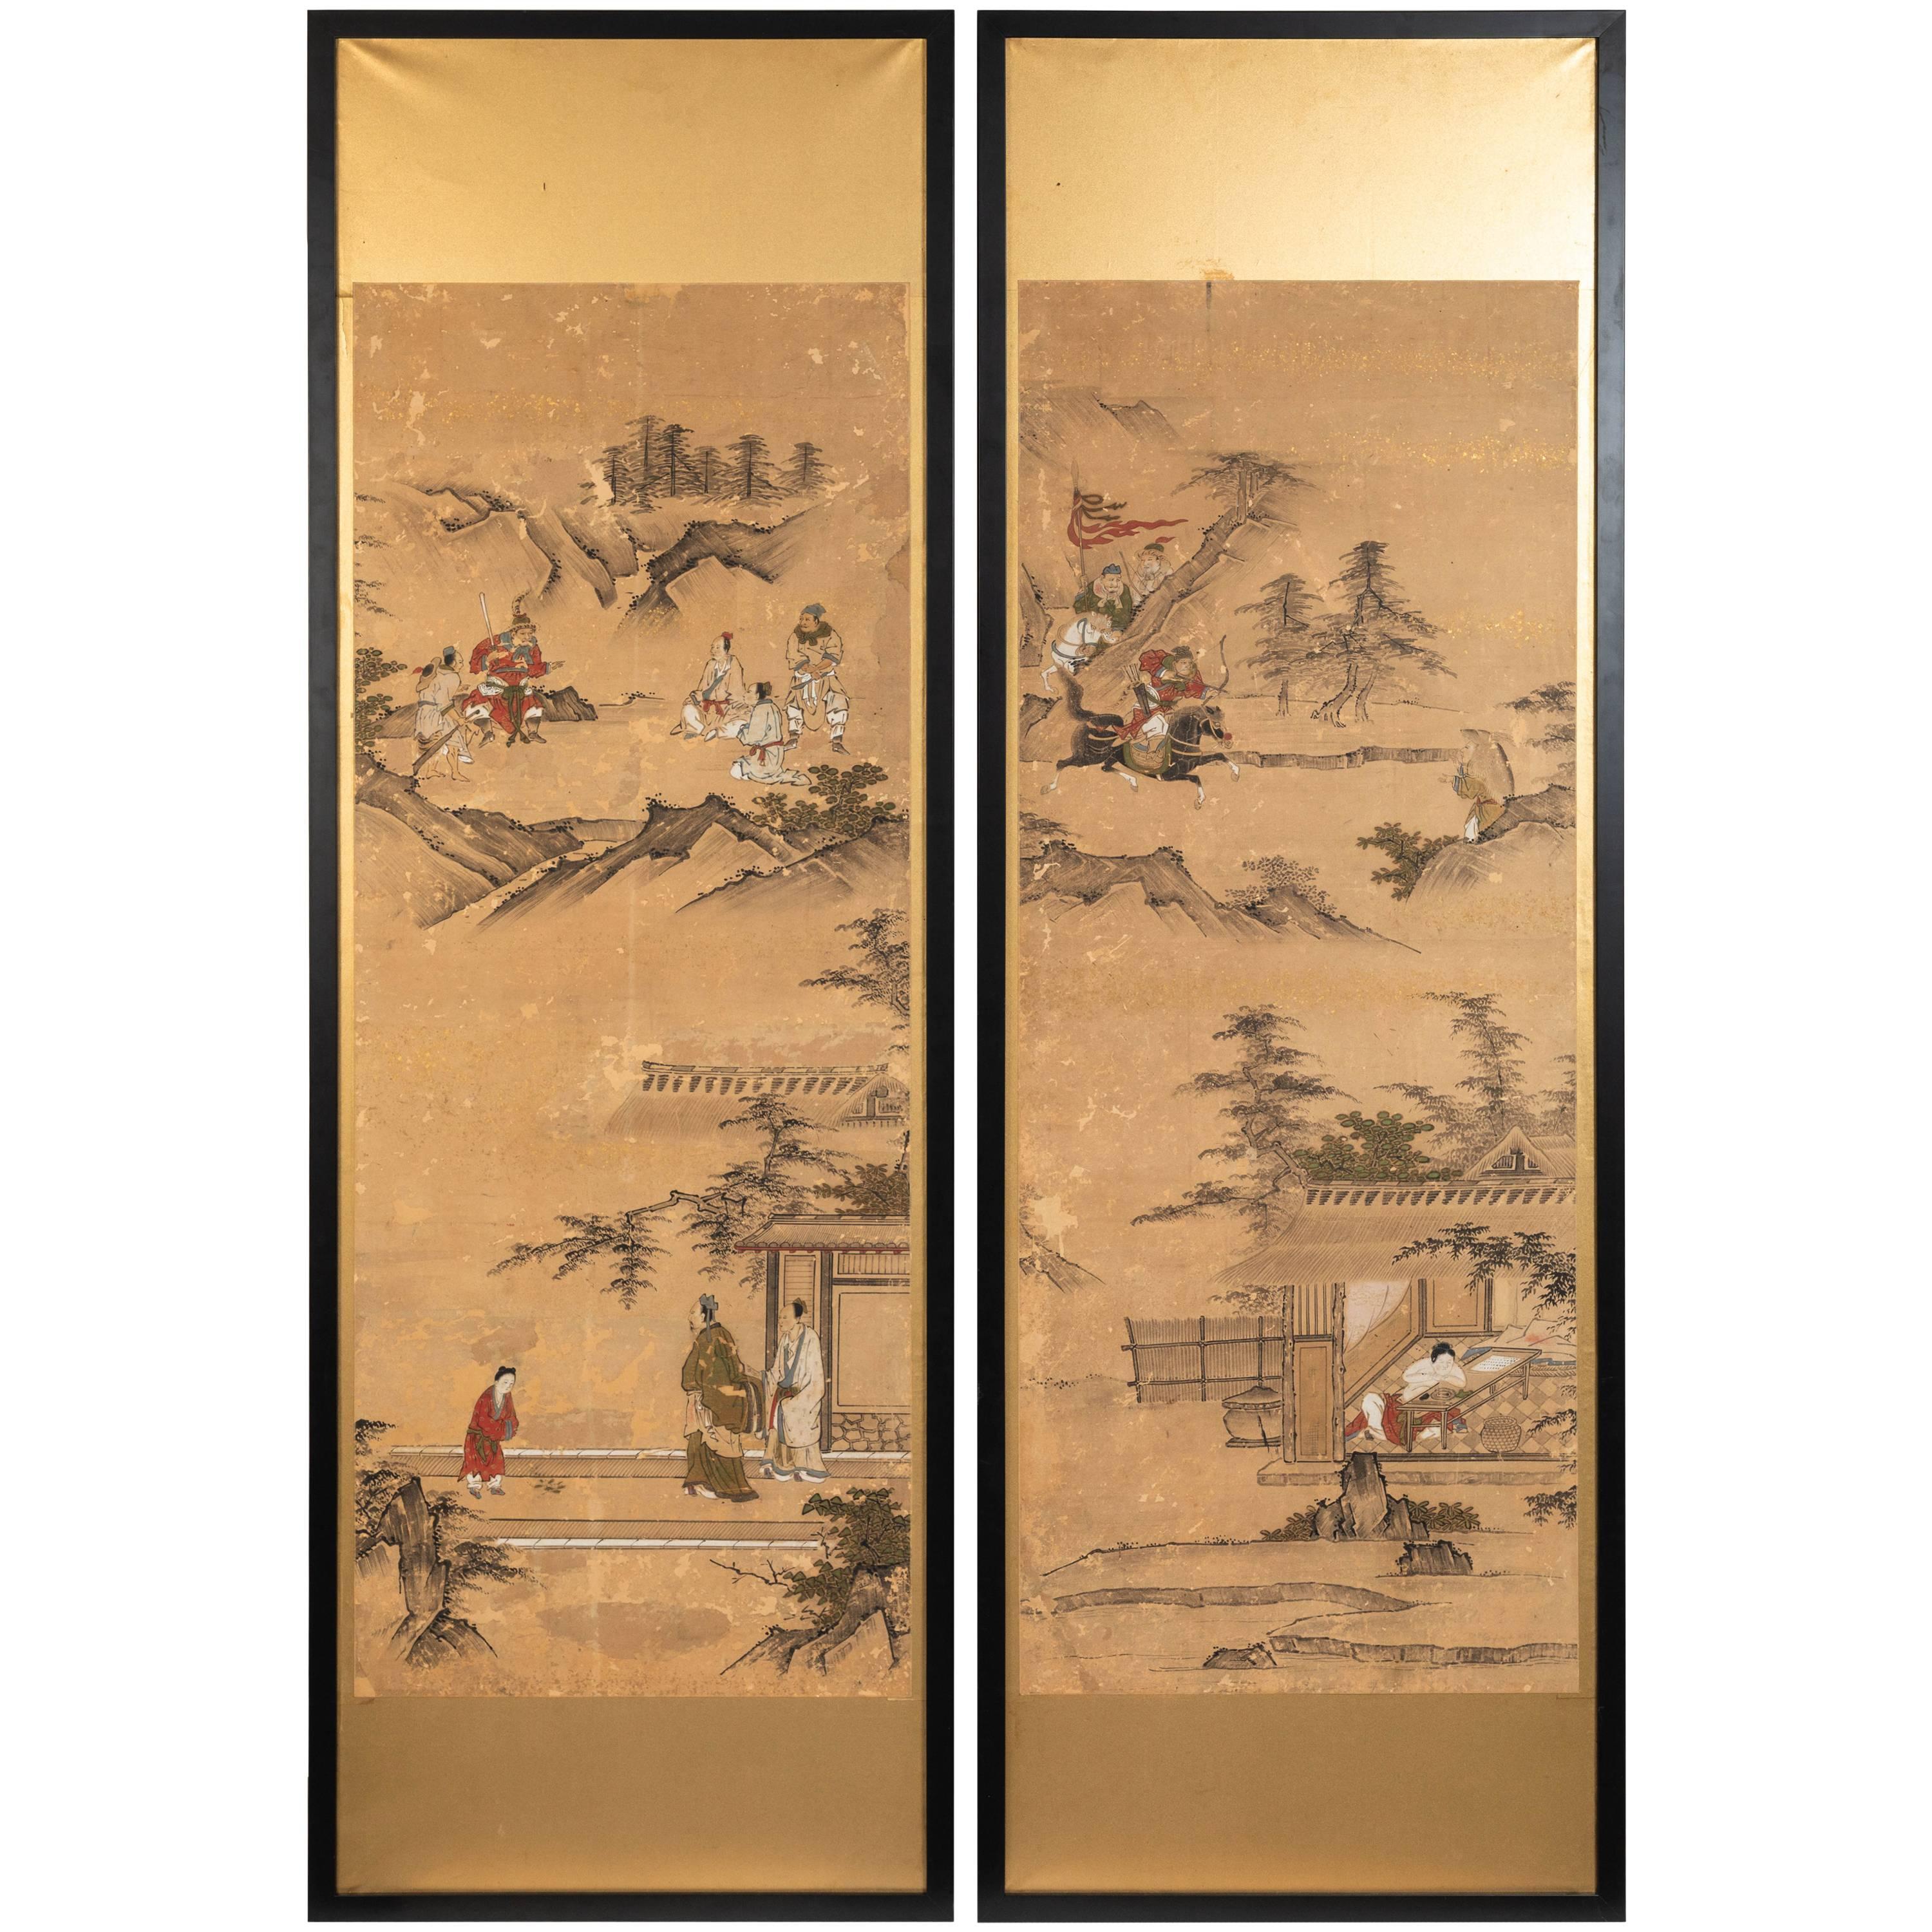 Antique Narrative Japanese Screen Panels on Gold Leaf, c. 1850-60